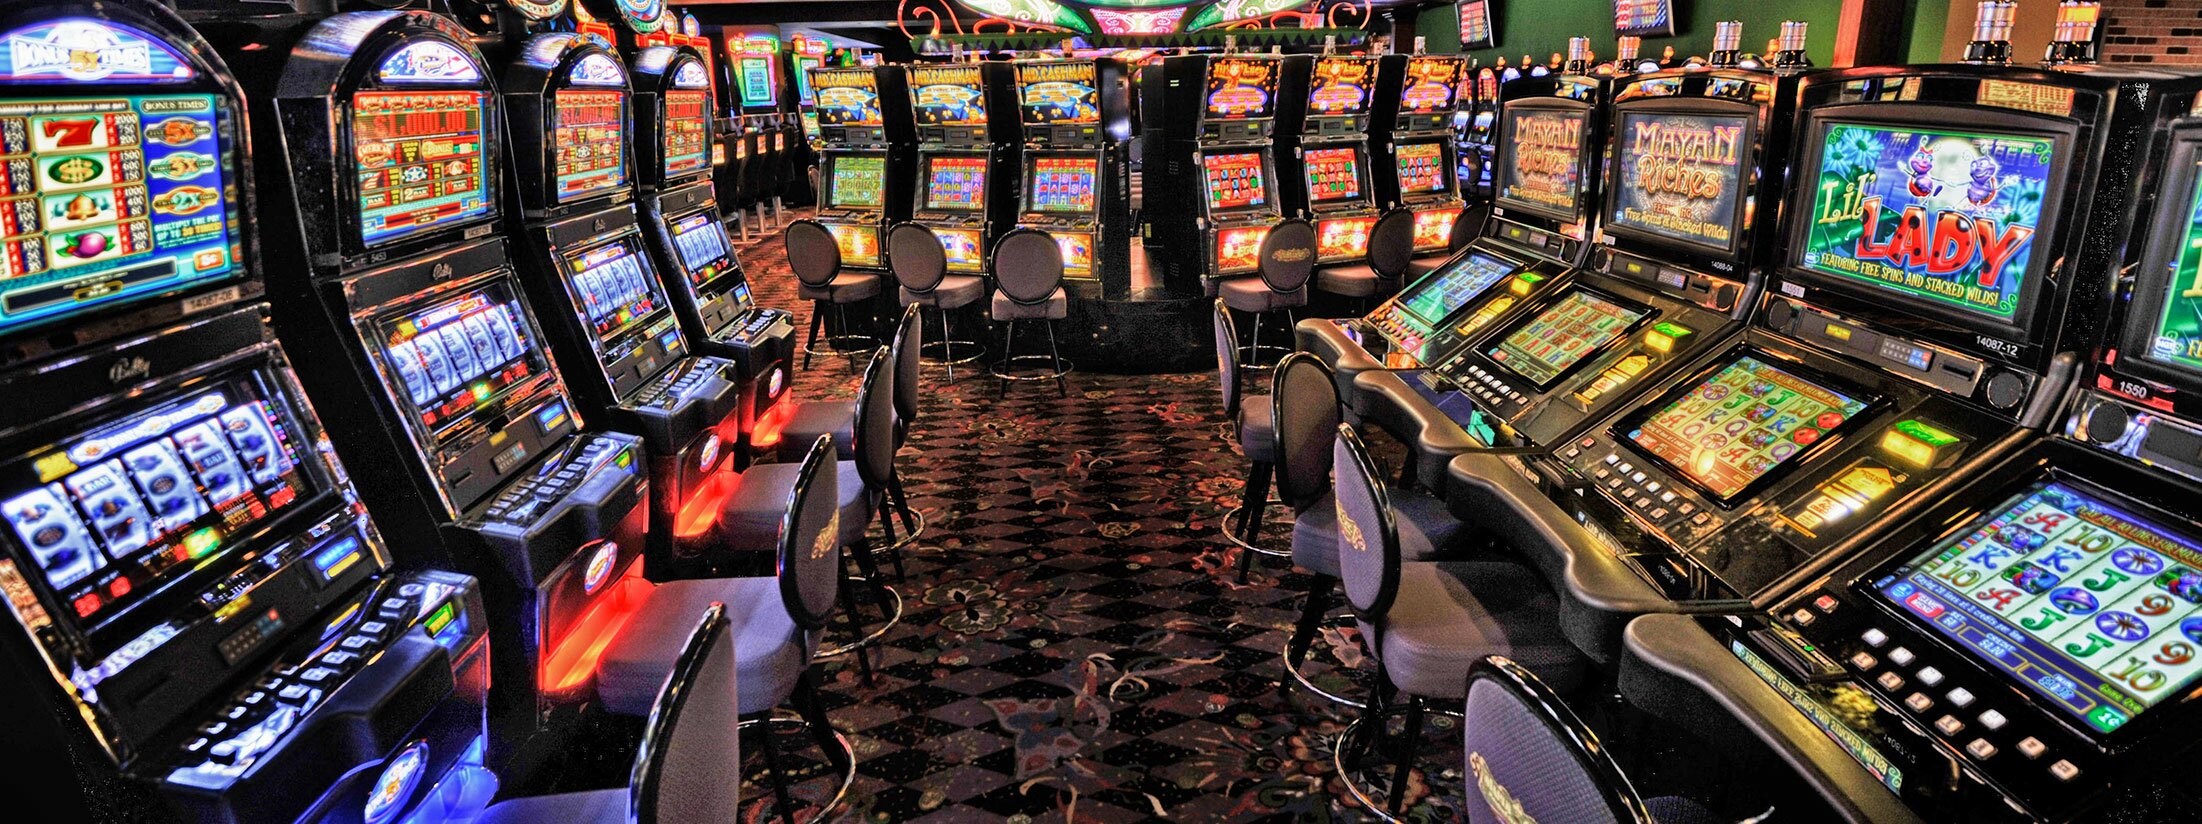 Online slot machines rigged